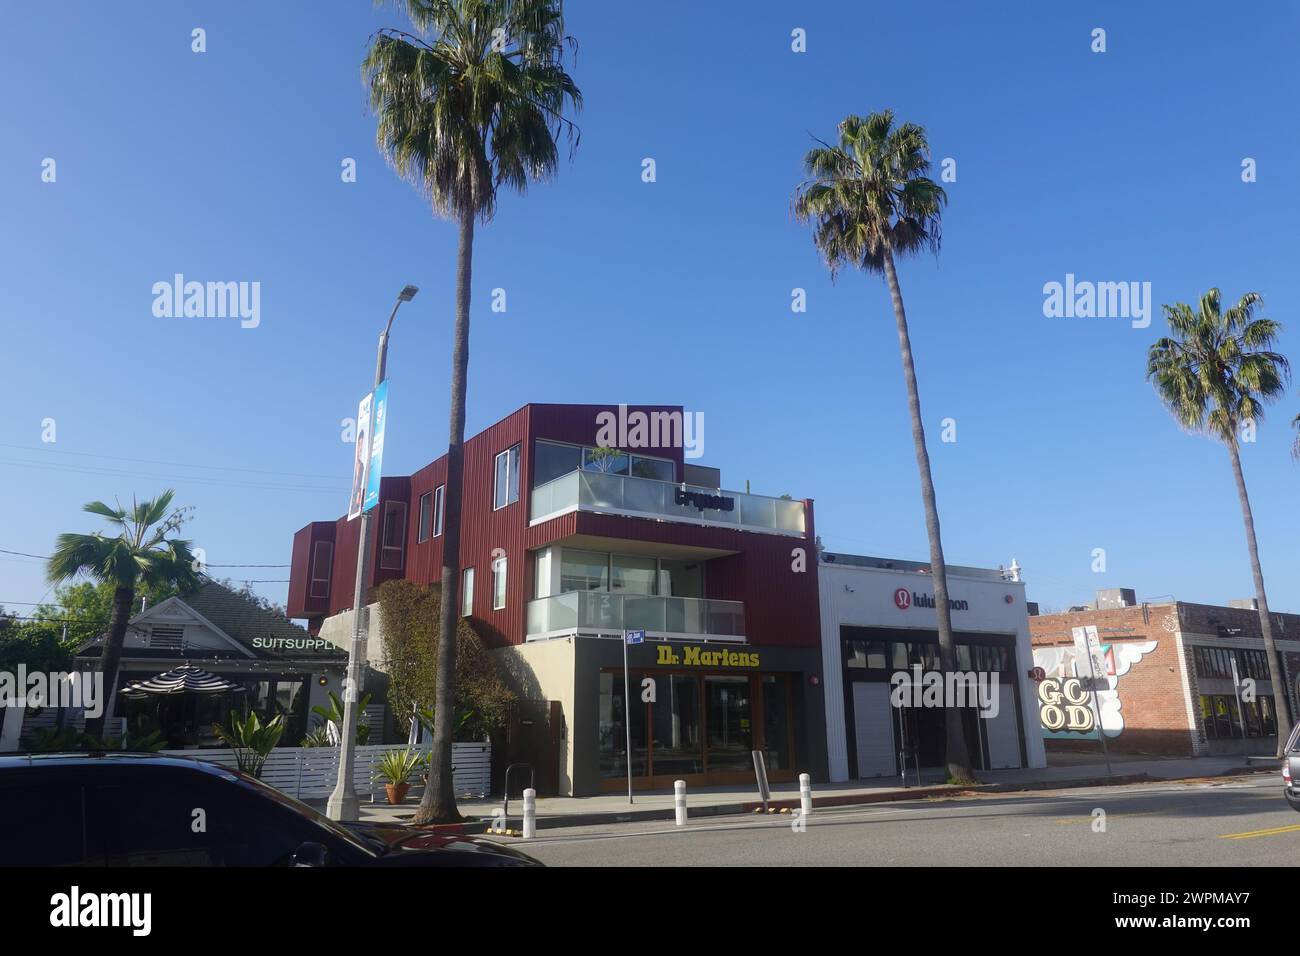 Dr. Martens shop Abott Kinney Boulevard, Venice, Santa Monica, California, USA Foto Stock